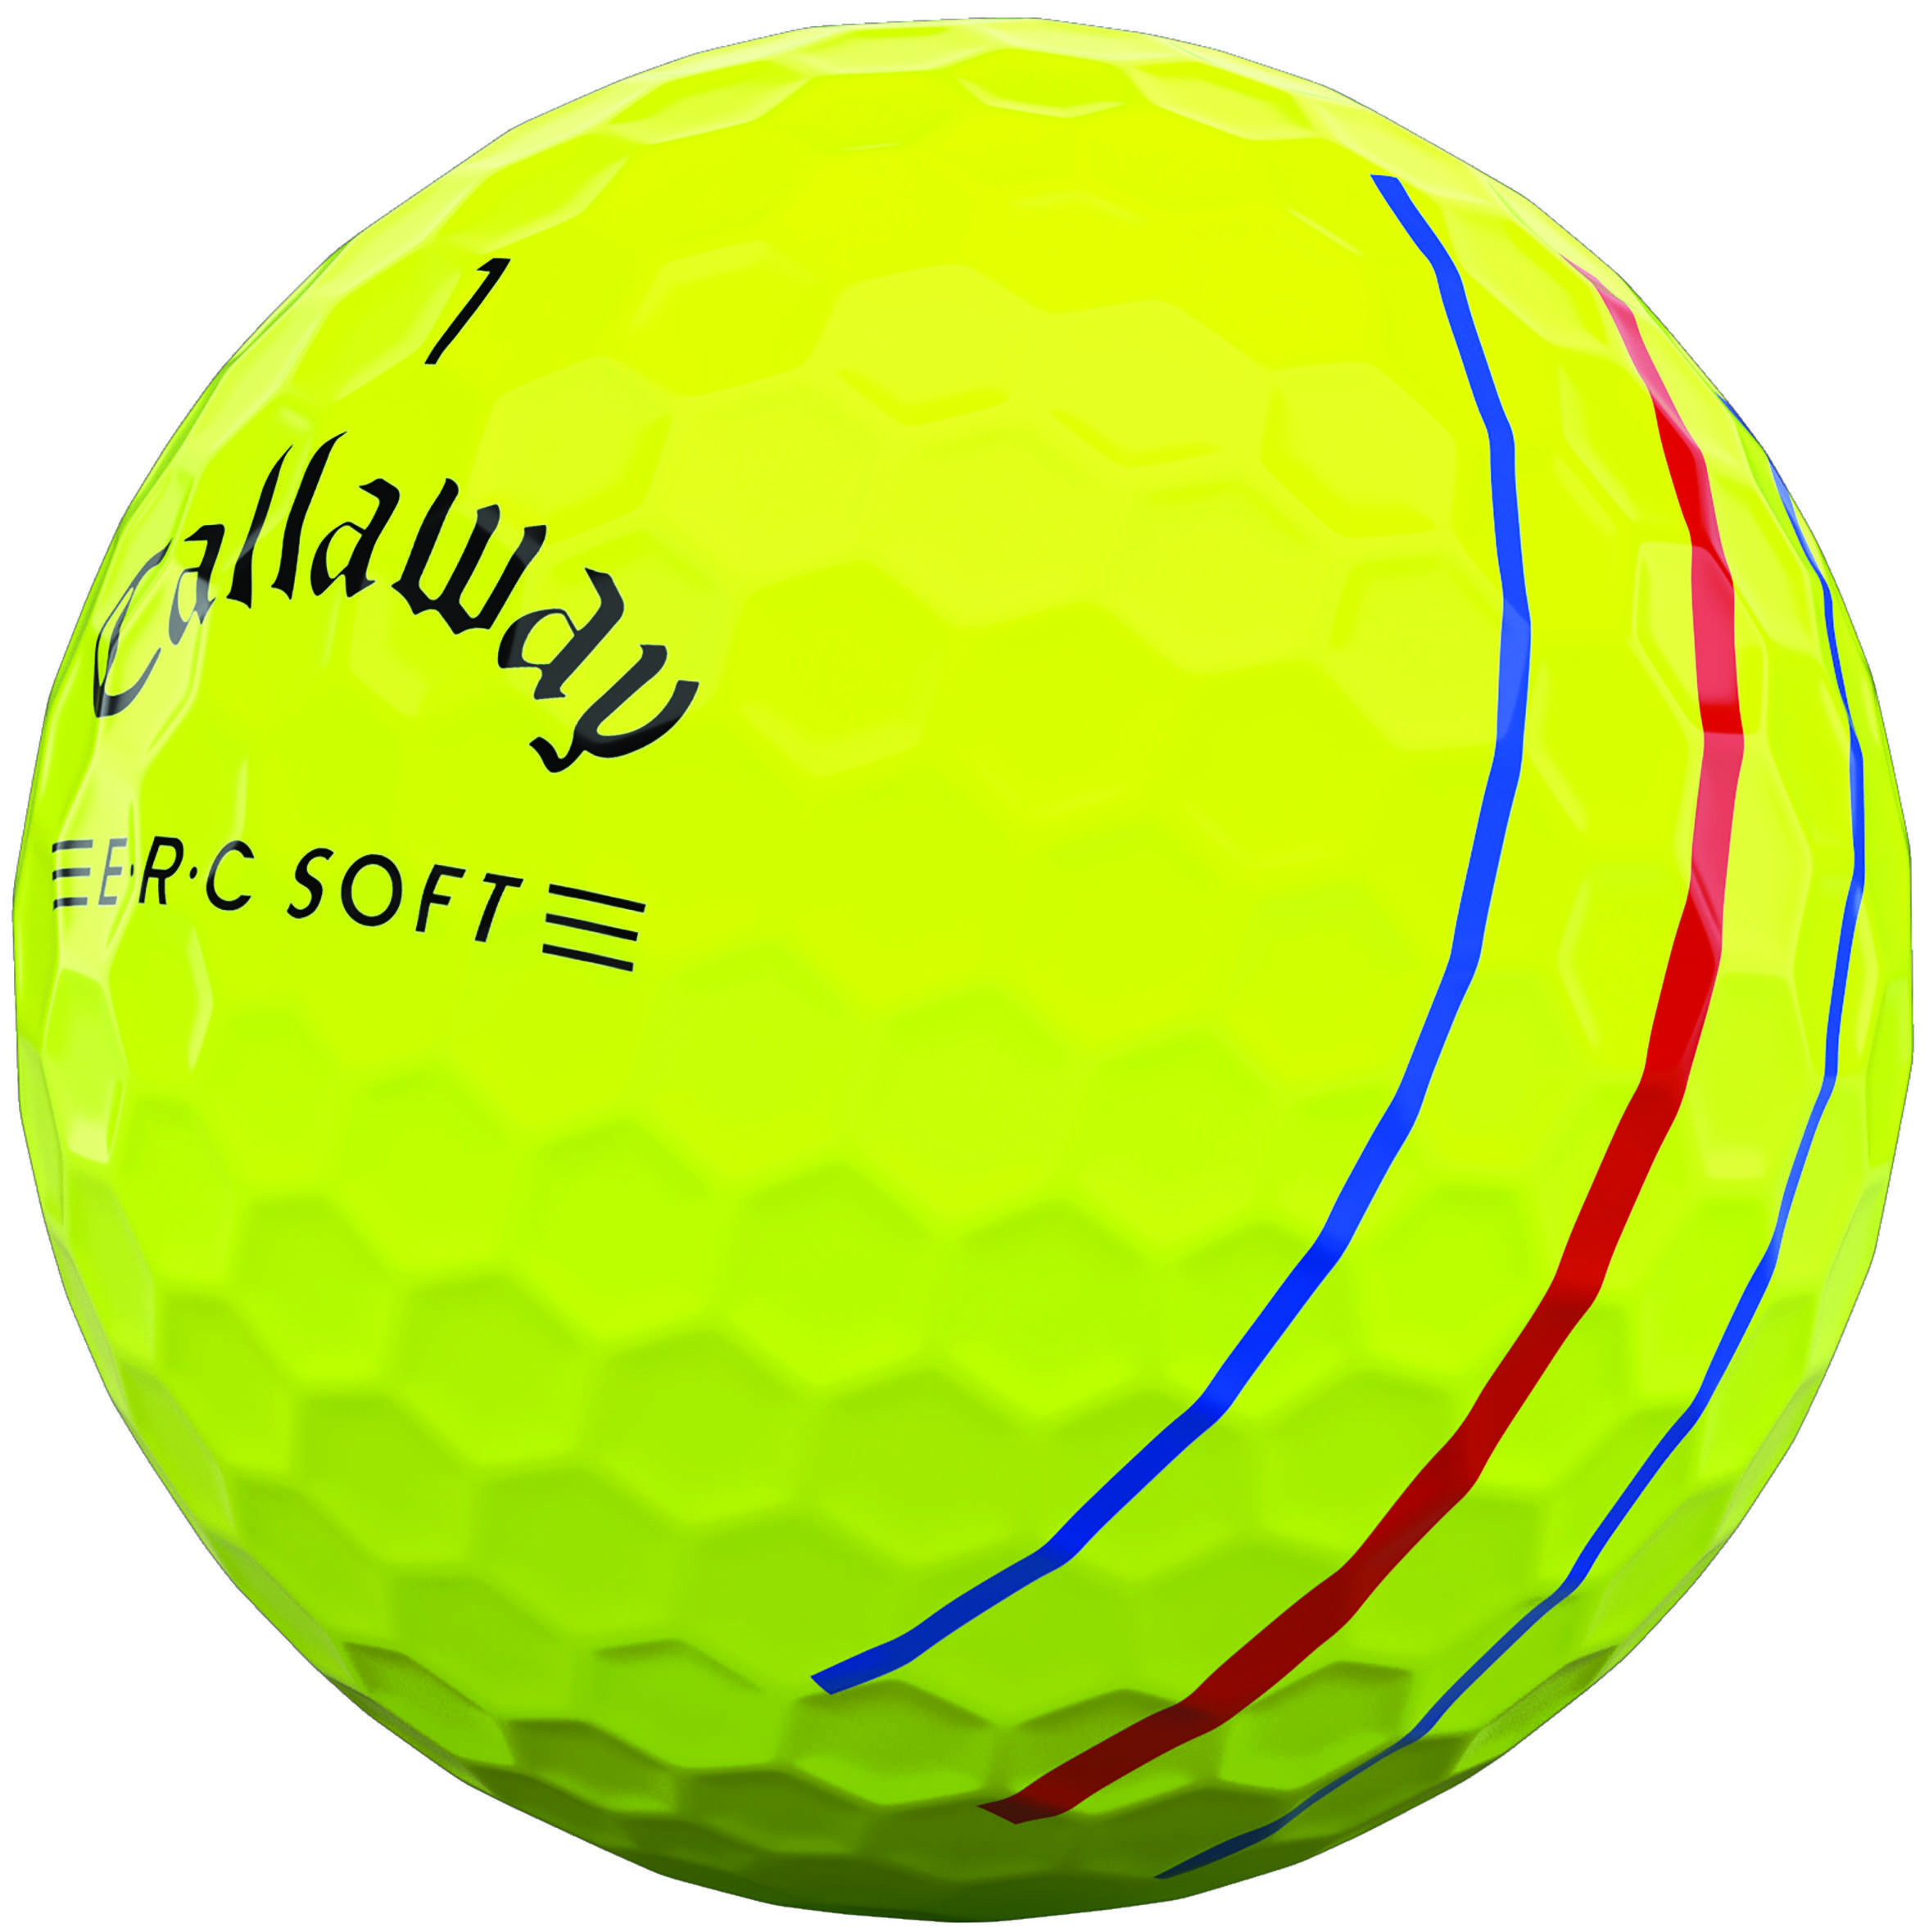 Callaway E.R.C Soft Golfbälle, yellow